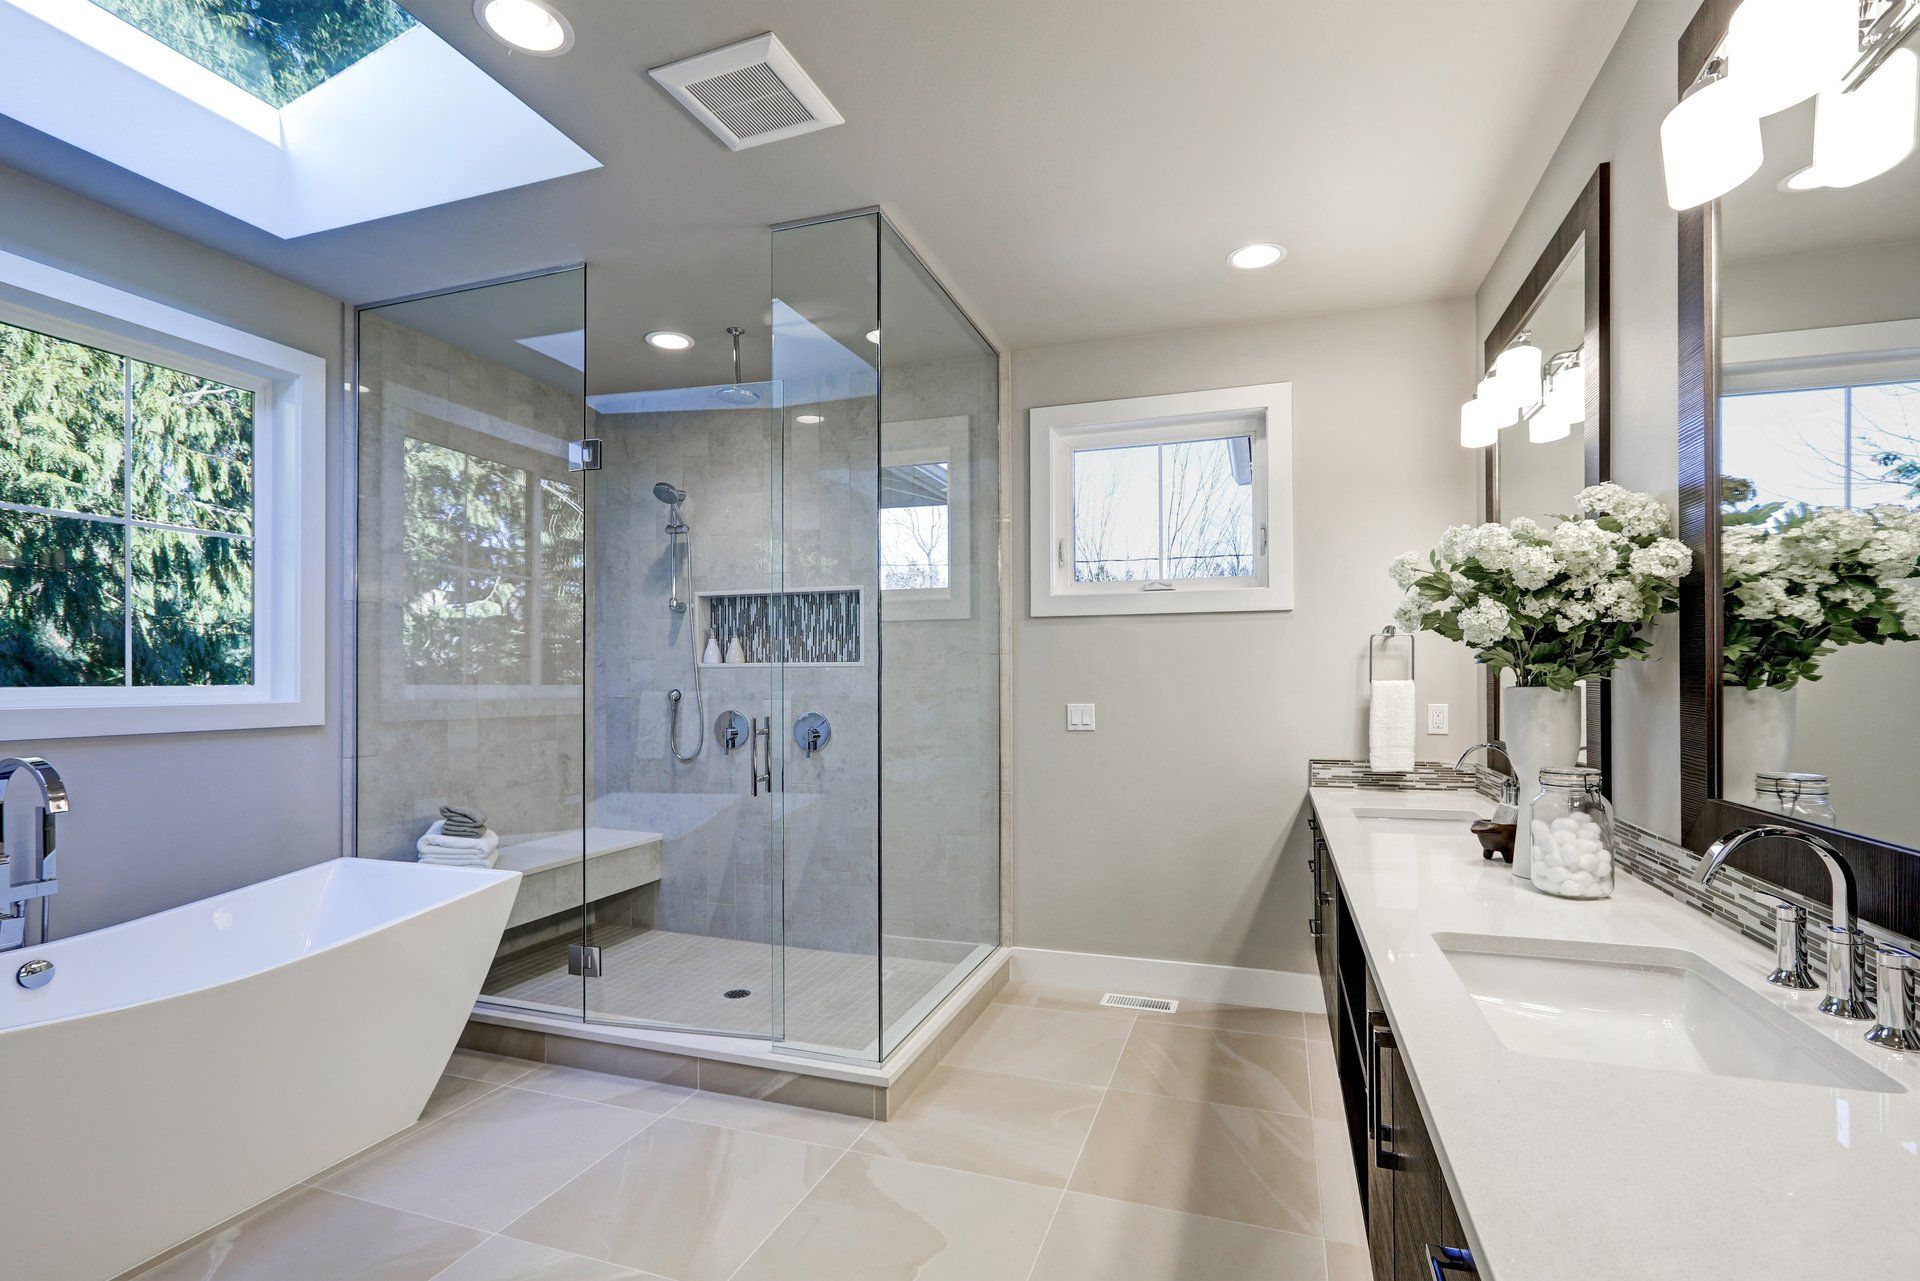 frameless shower enclosure in a modern style bathroom